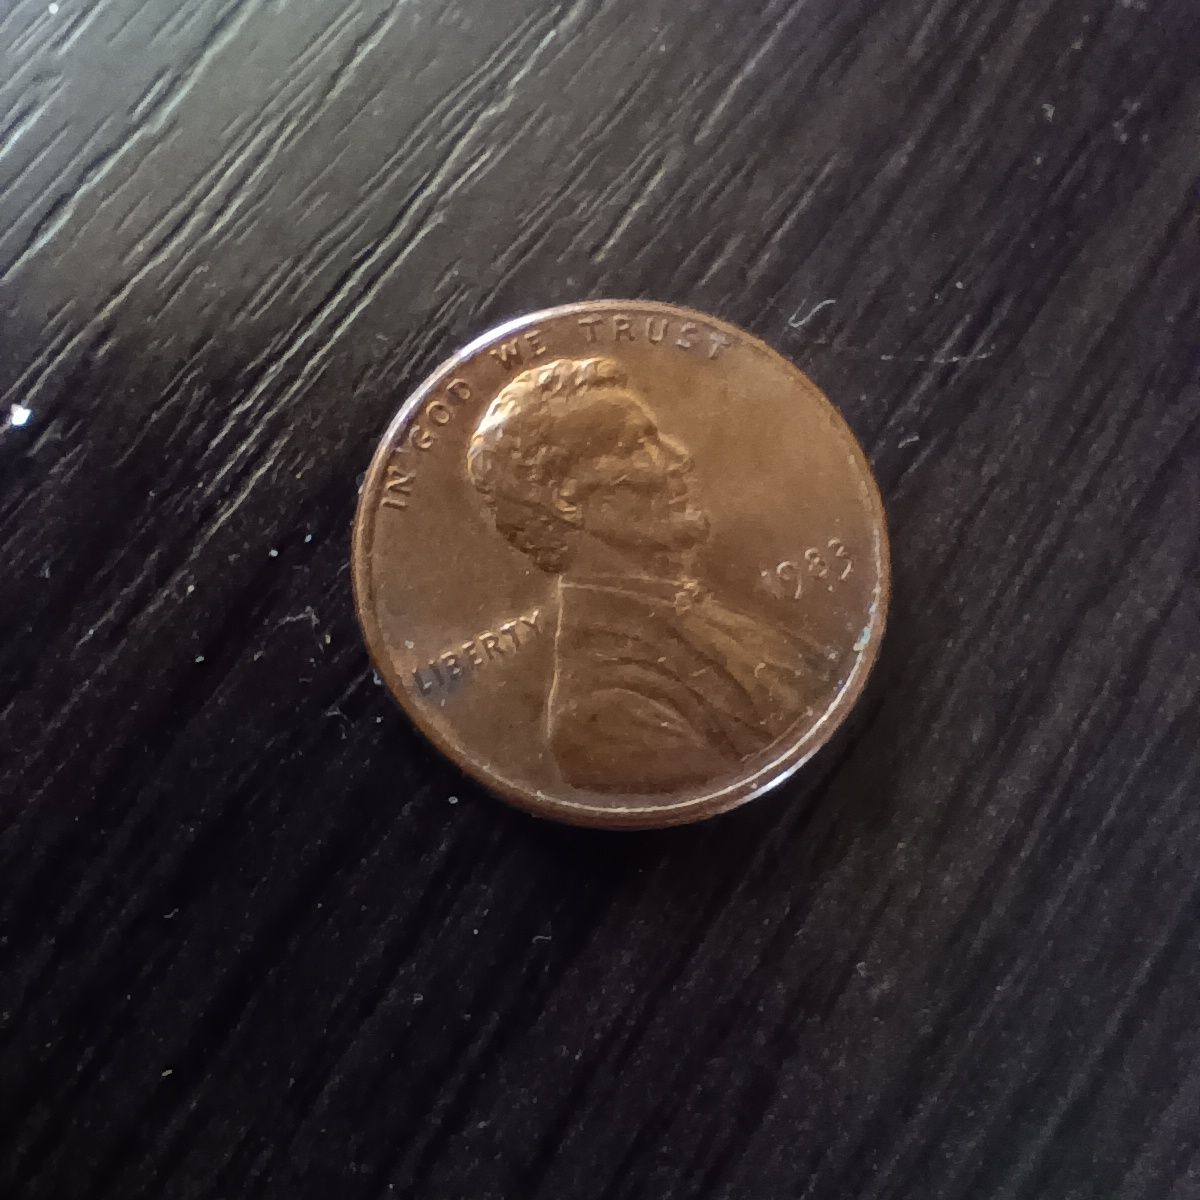 Один цент 1983 (США) one cent